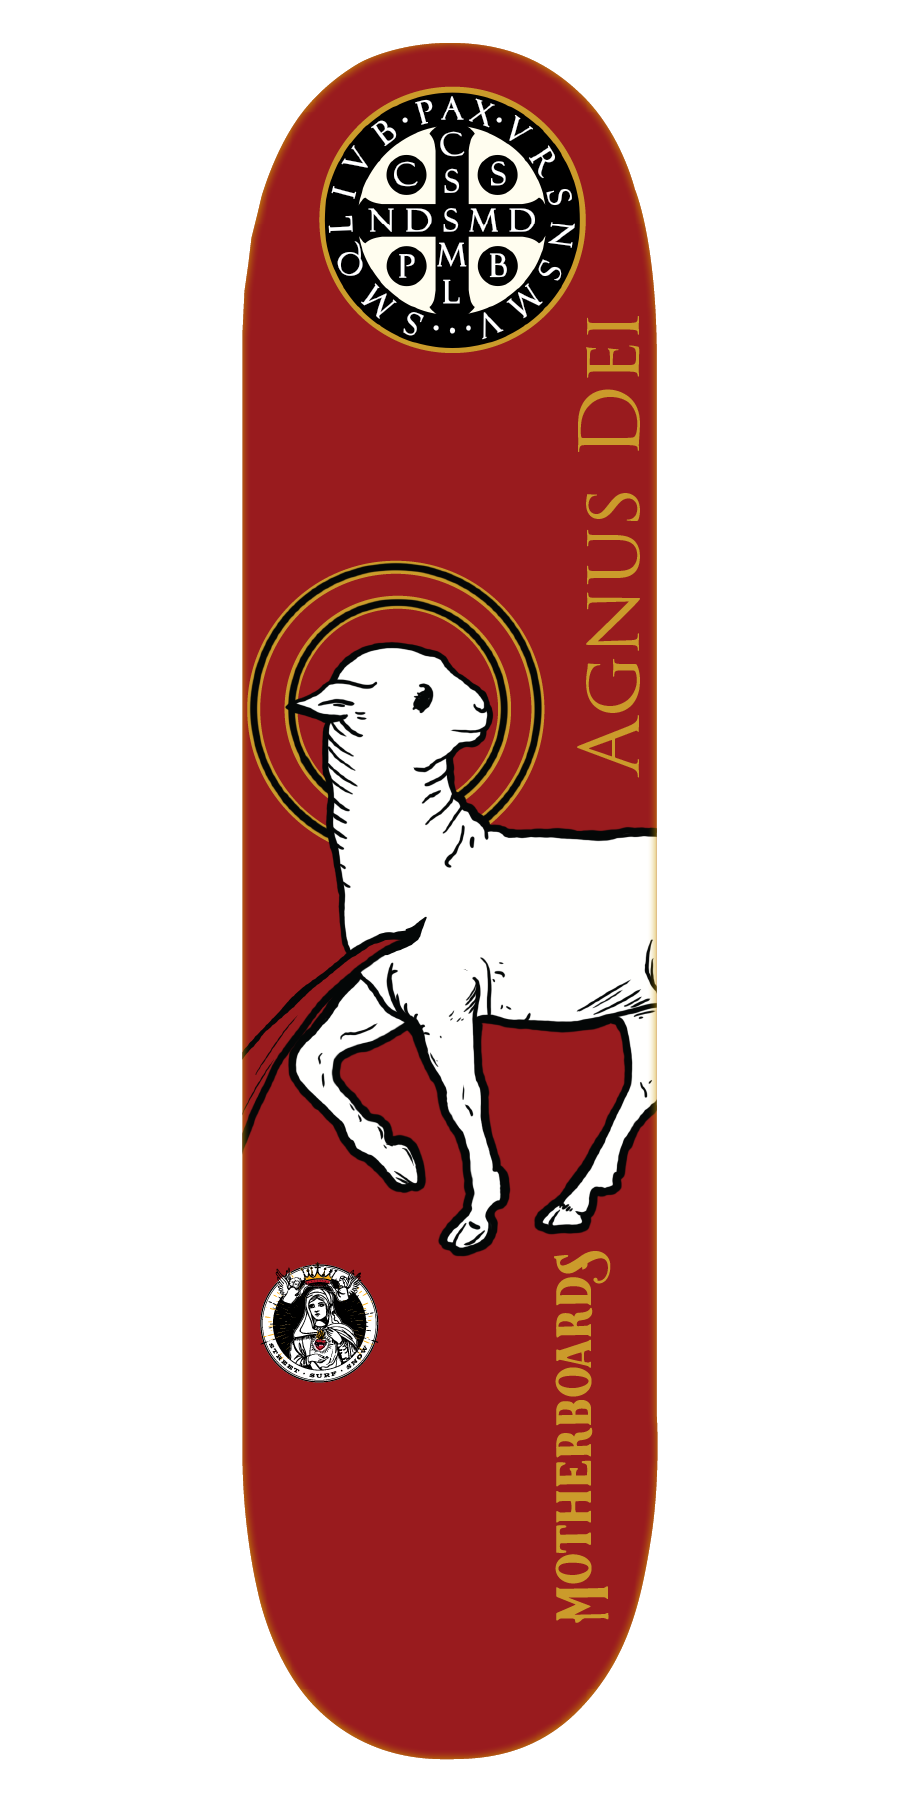 Red Agnus Dei (Lamb of God) Skateboard Deck